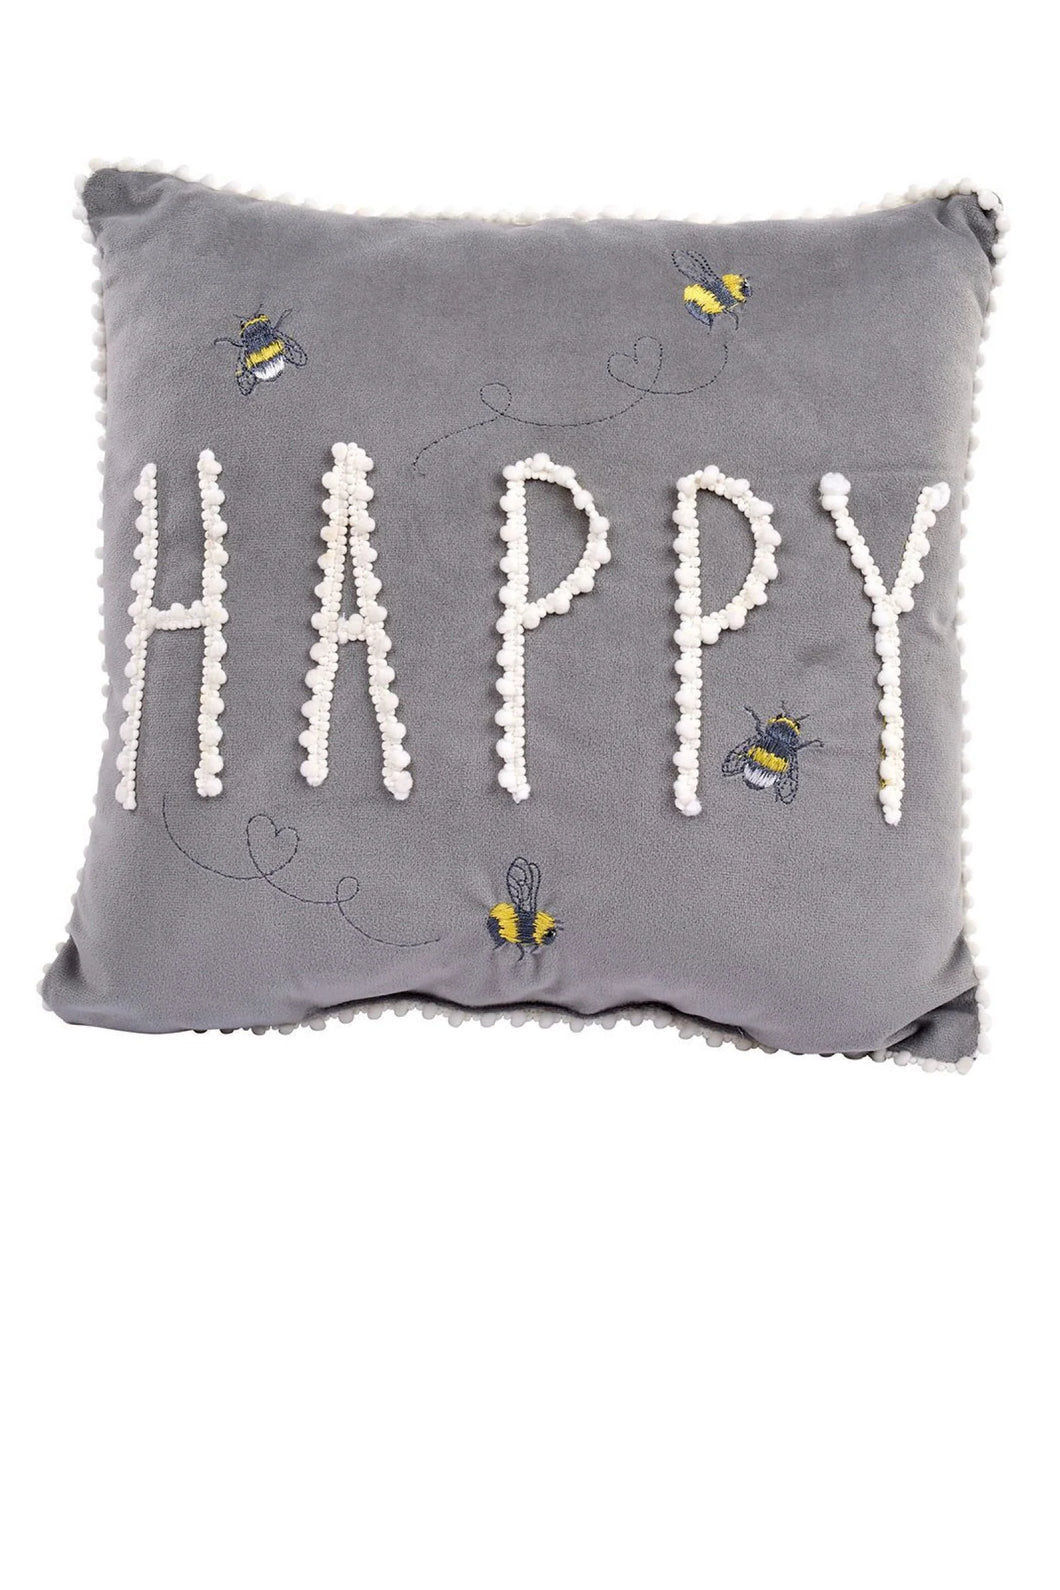 Square 'Happy' Bee Cushion